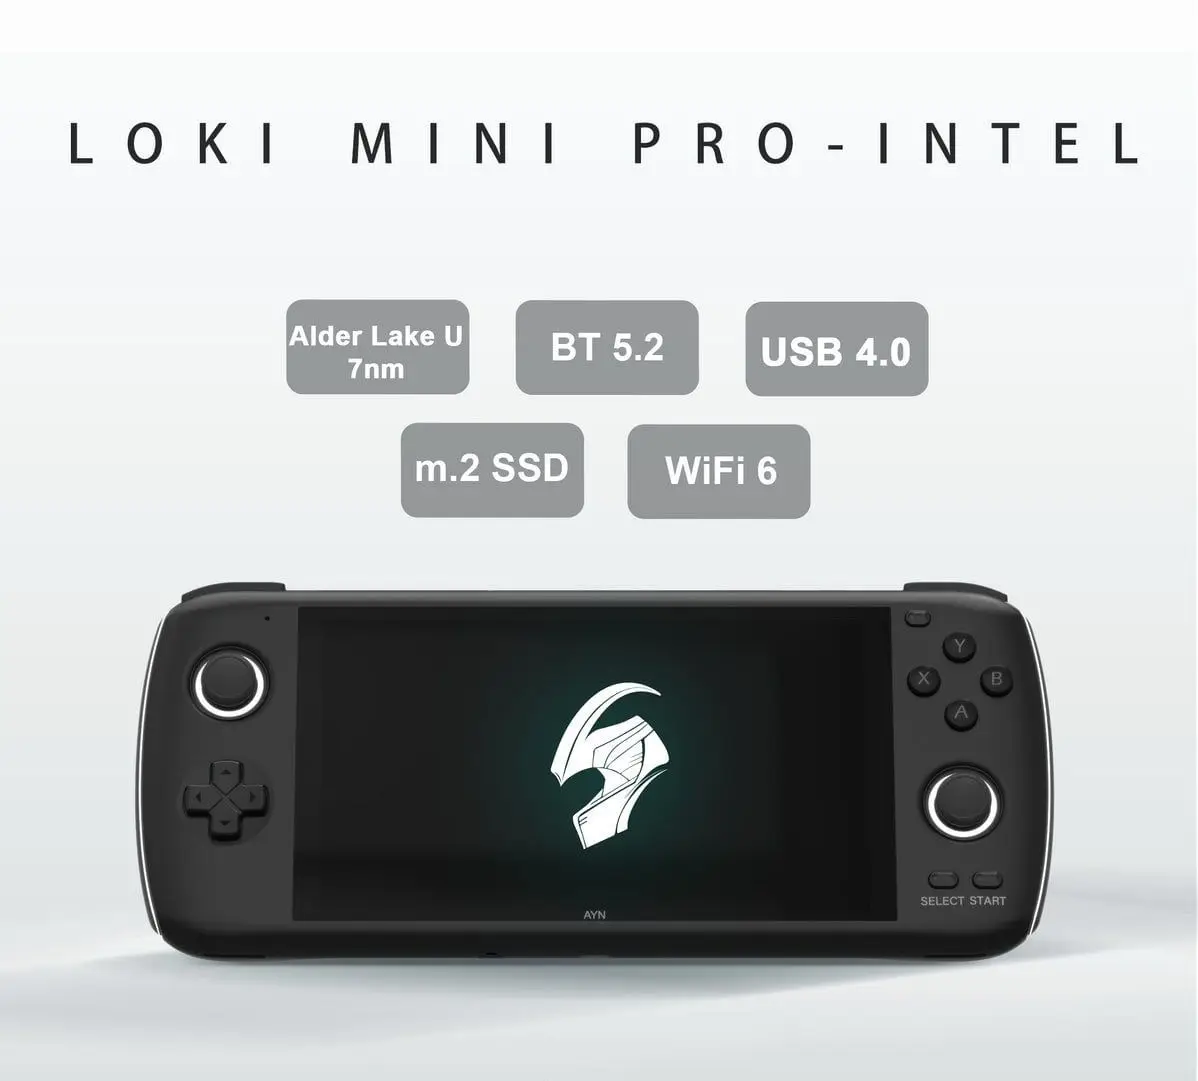 Ayn’s Loki Mini is one of the cheapest handheld PCs yet